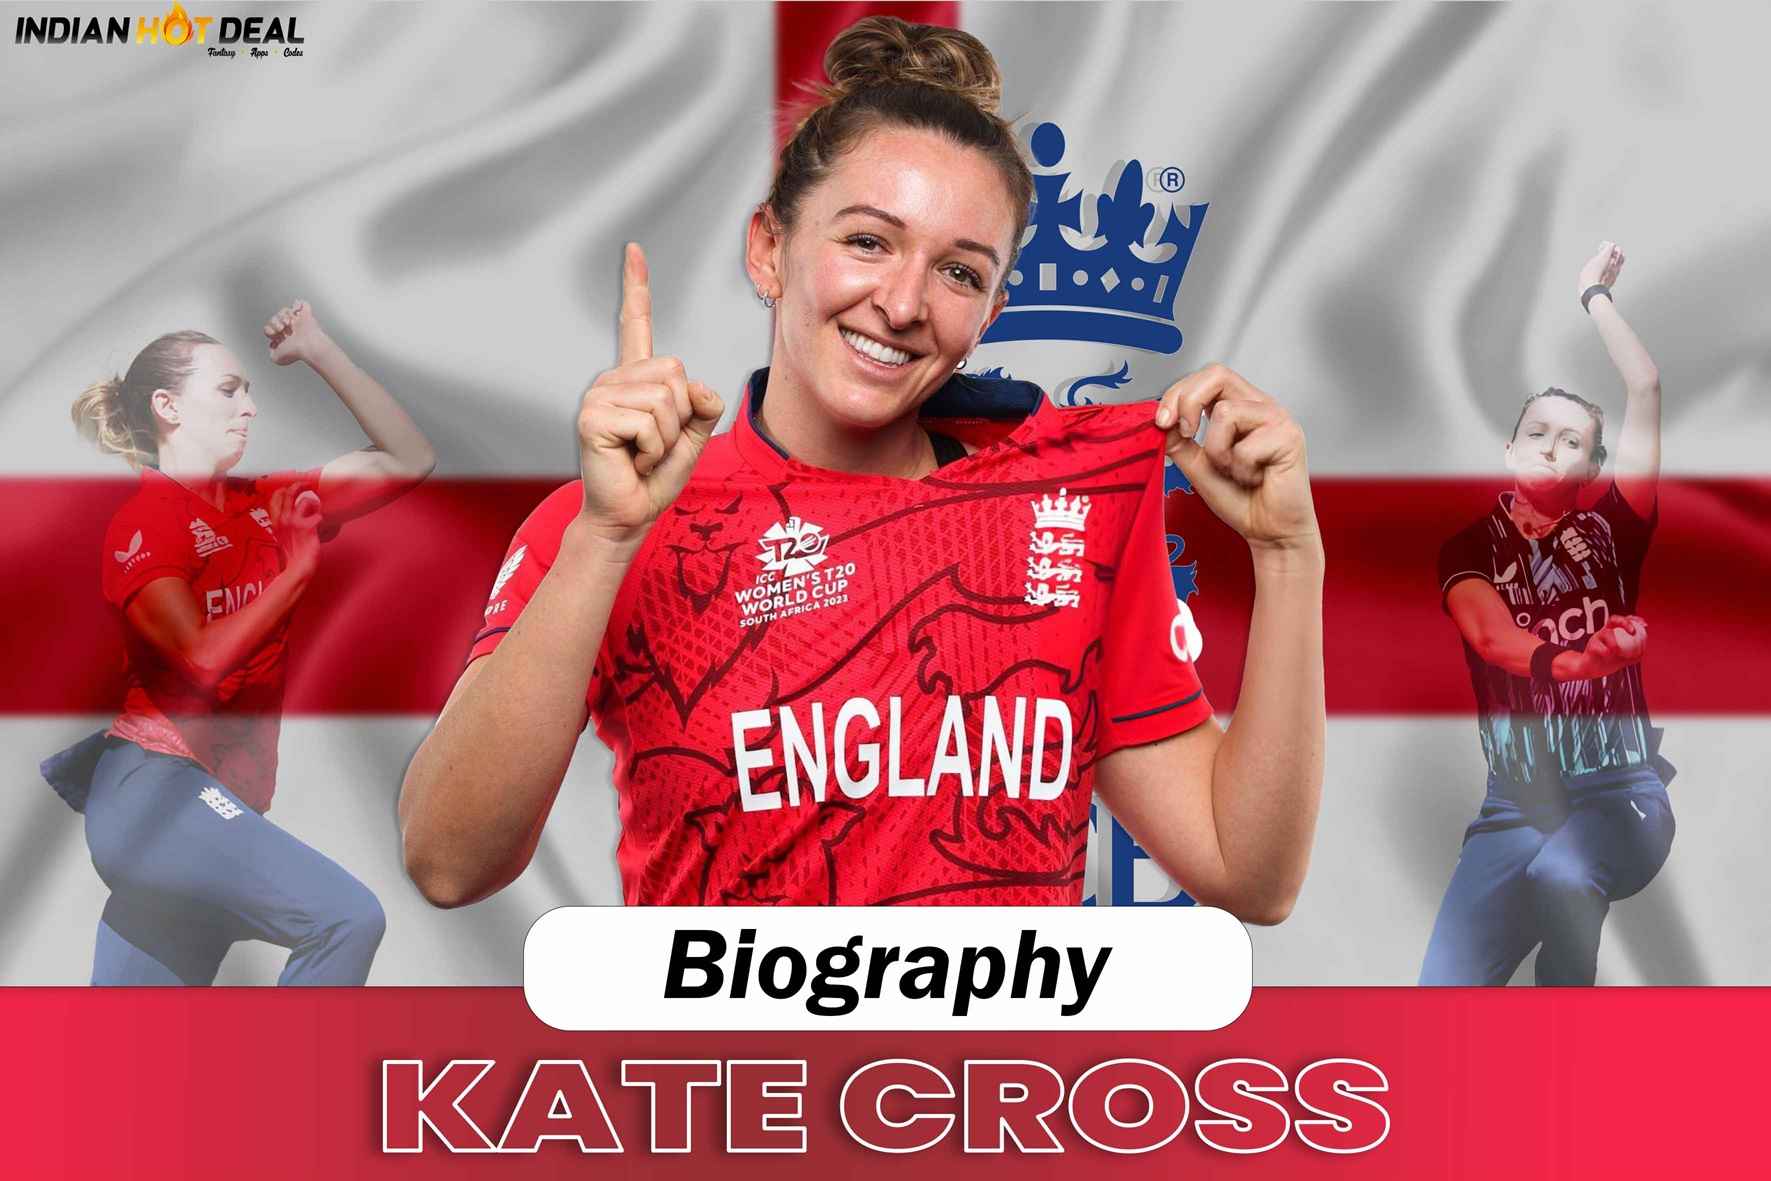 Kate Cross Biography